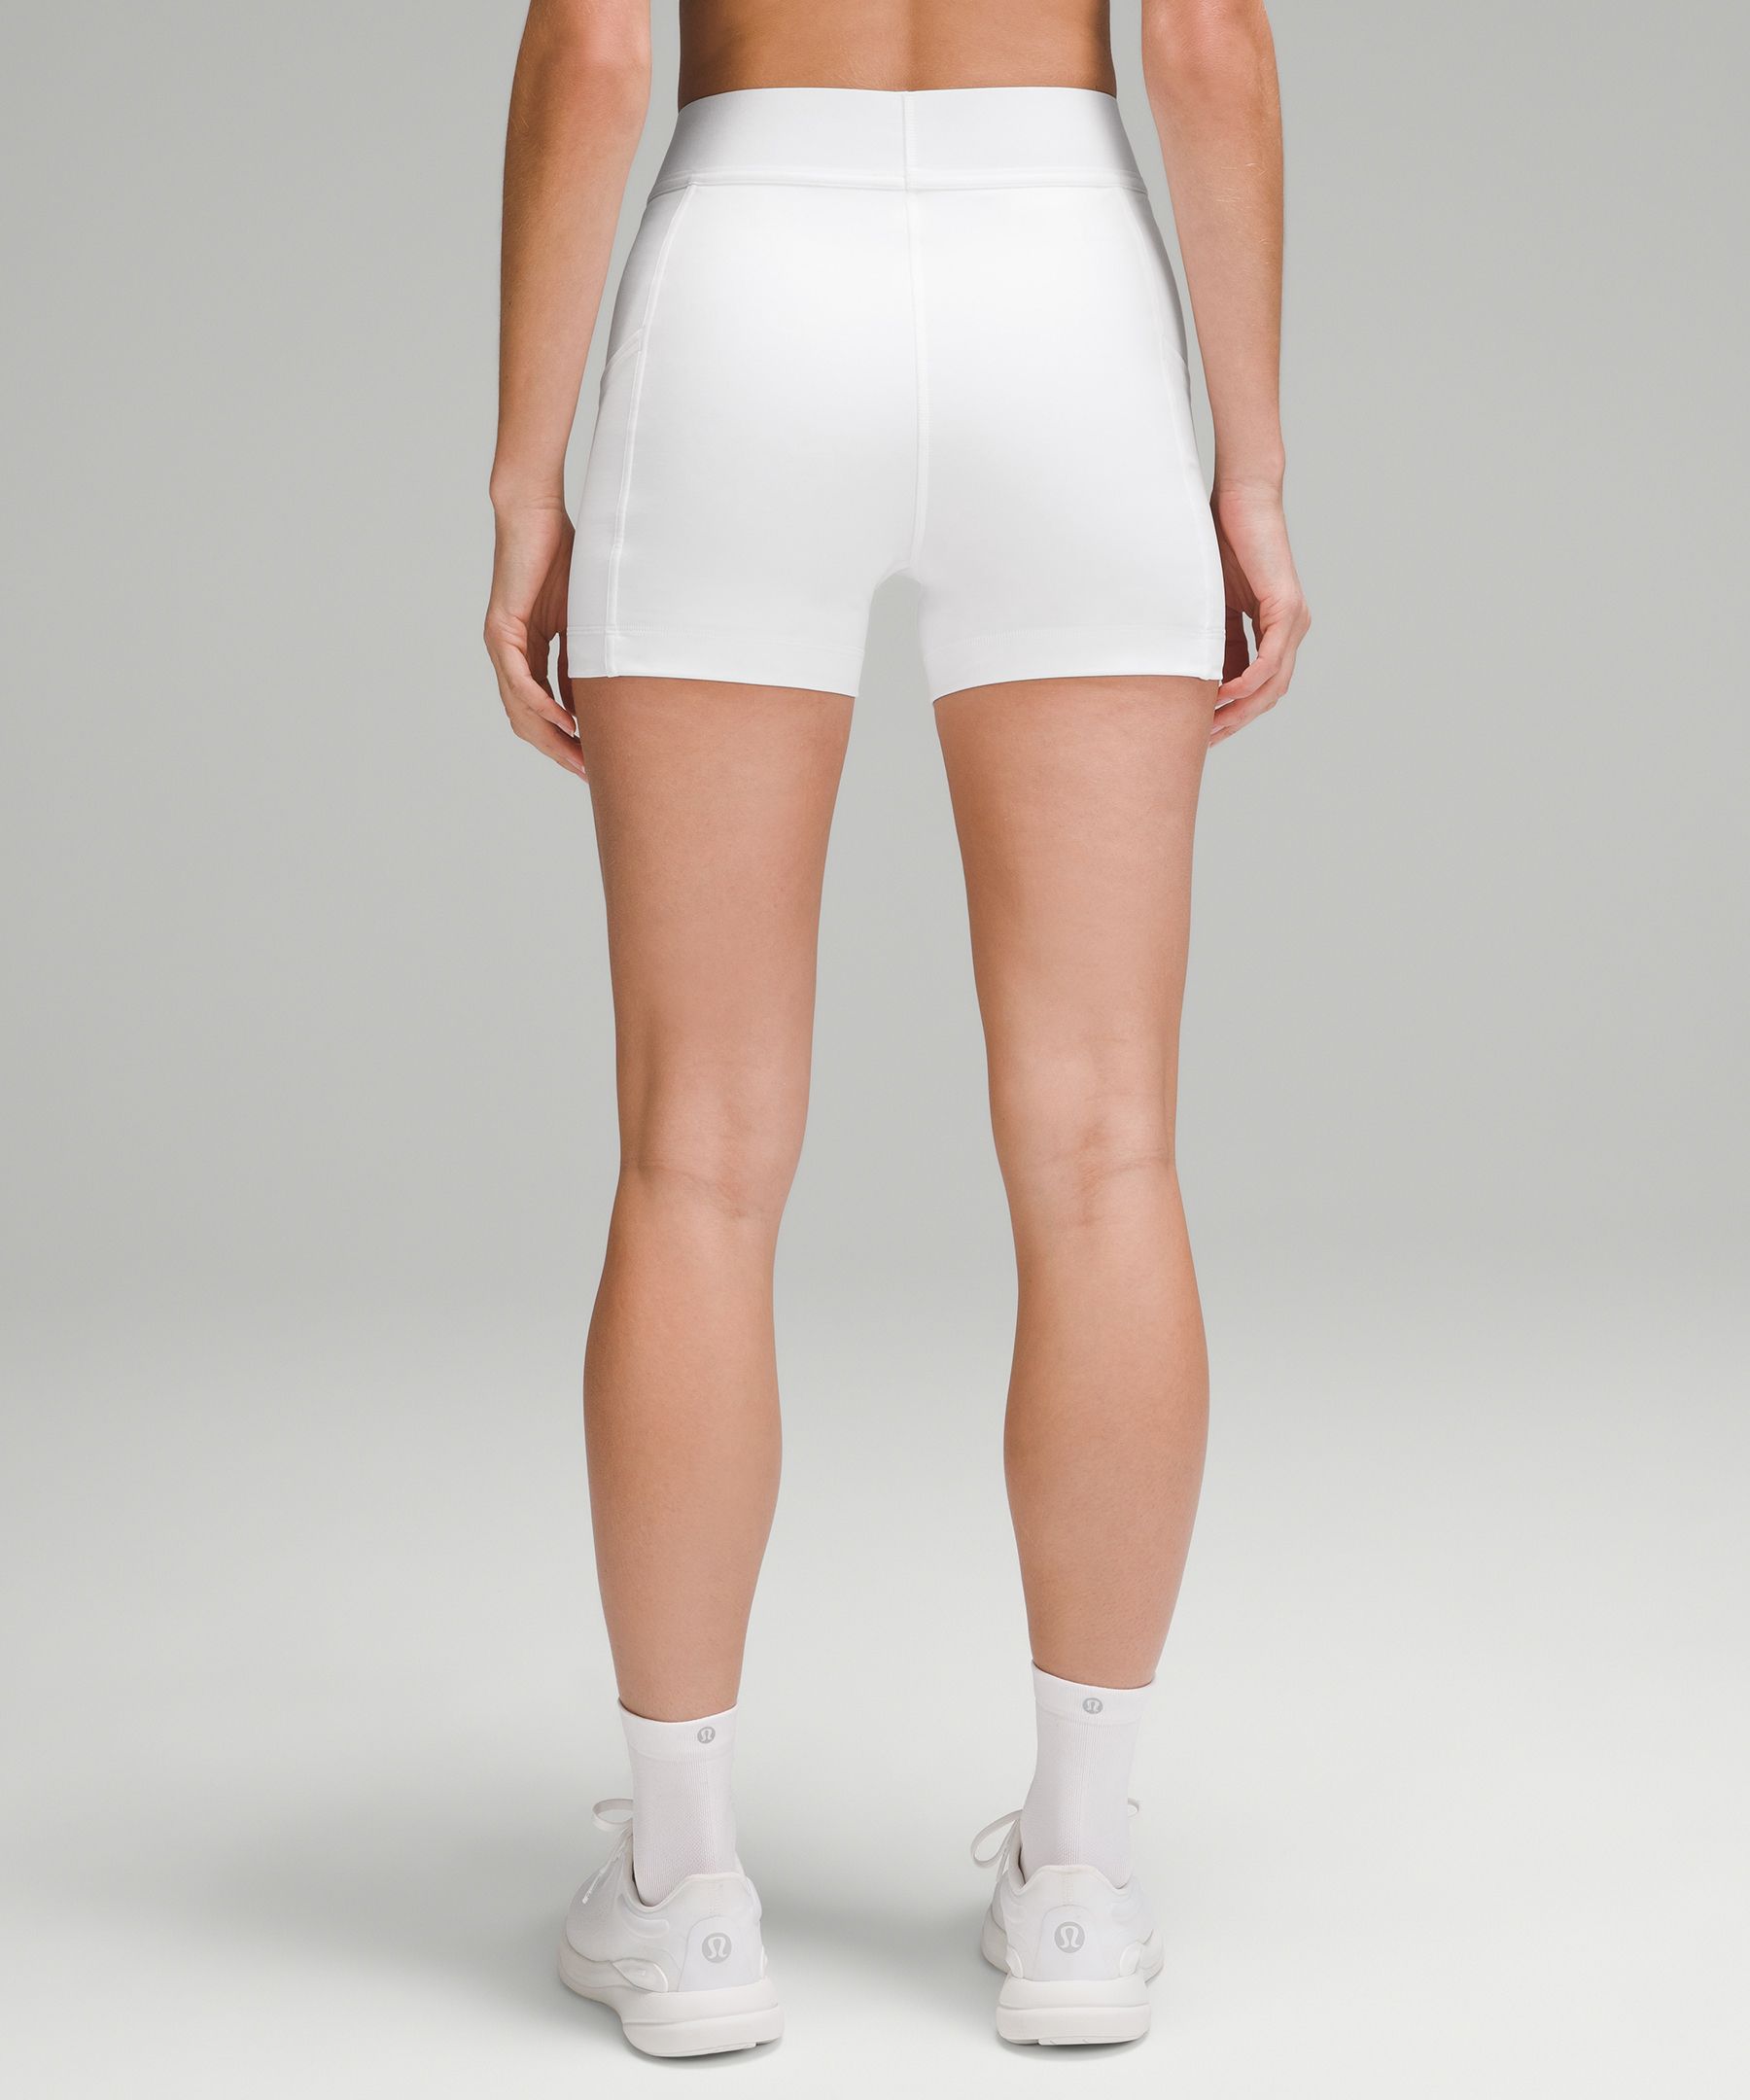 Luxtreme High-Rise Tennis Short 3.5, Women's Shorts